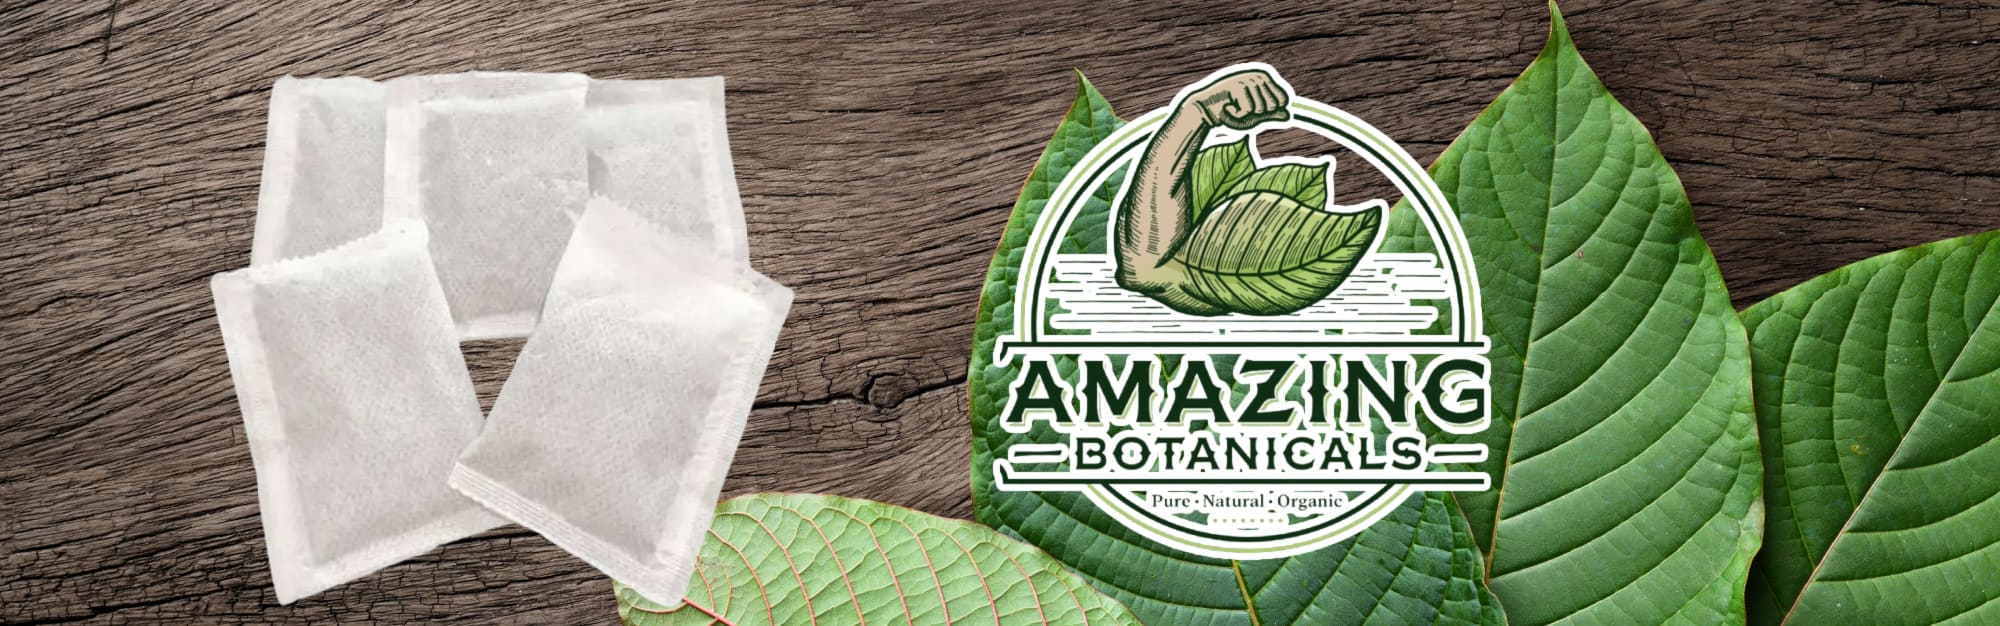 image of amazing botanicals tea bags